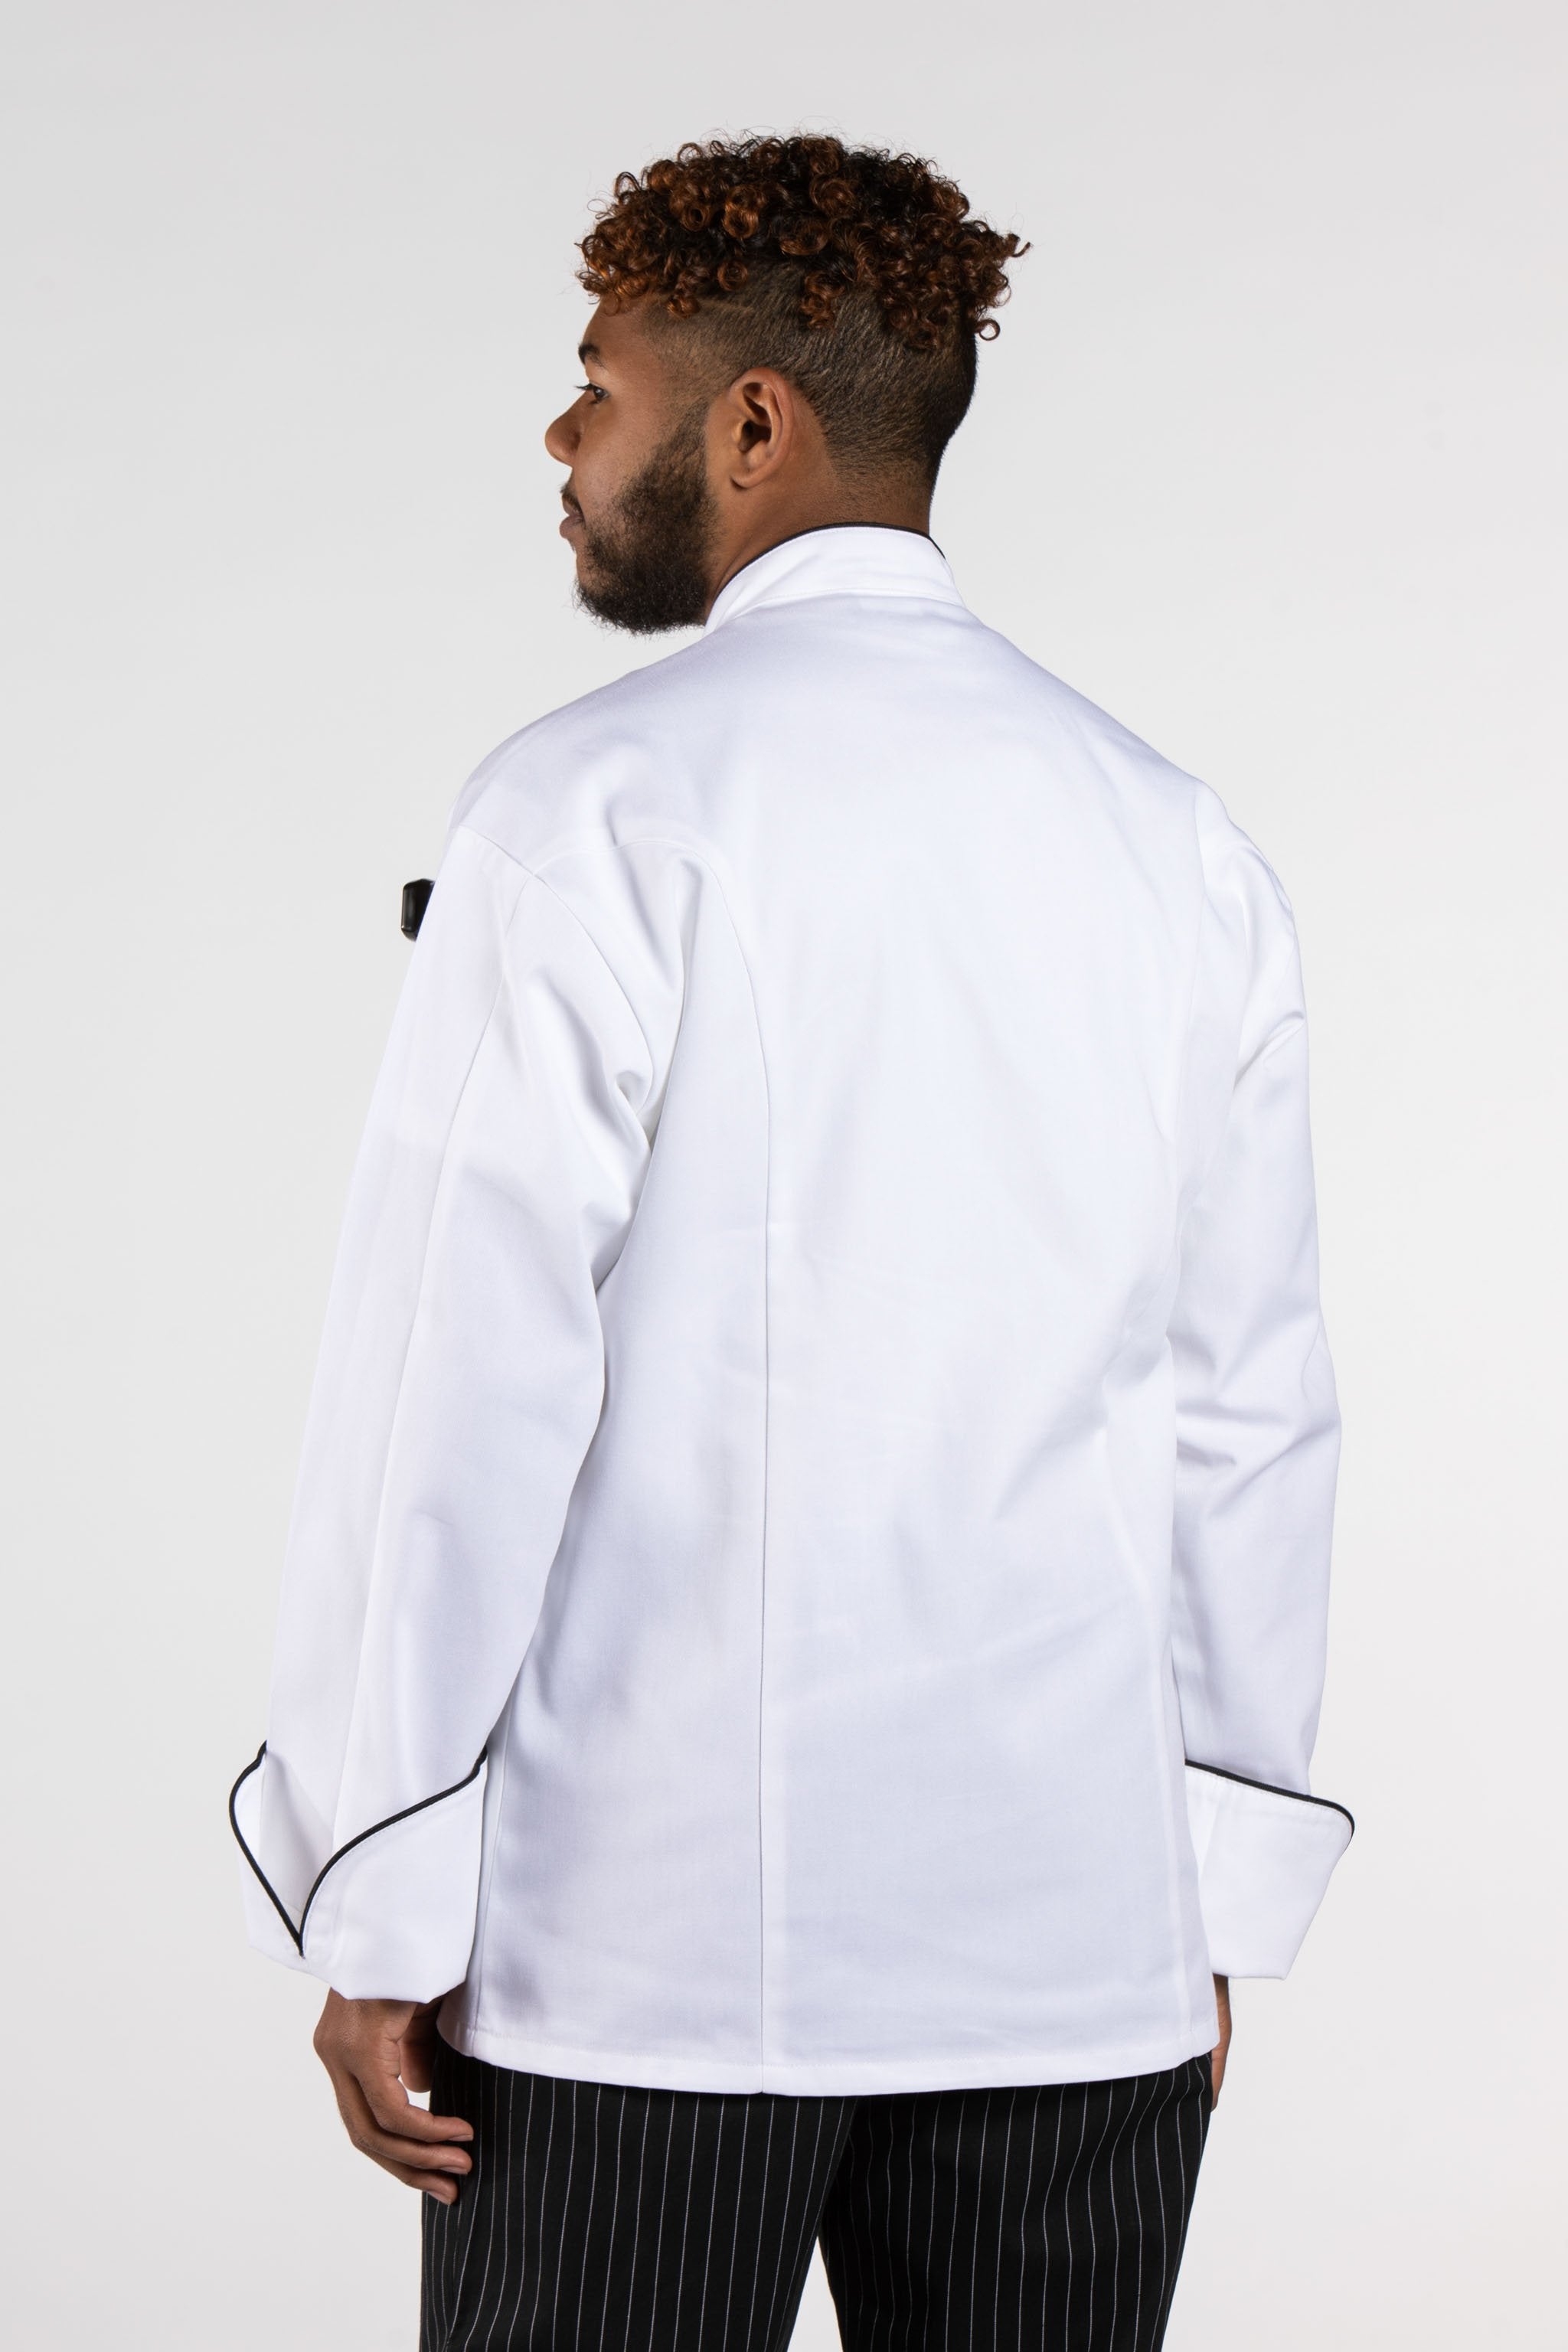 White Chef Jacket by CYC Corporate Label Singapore – CYCCorporateLabel